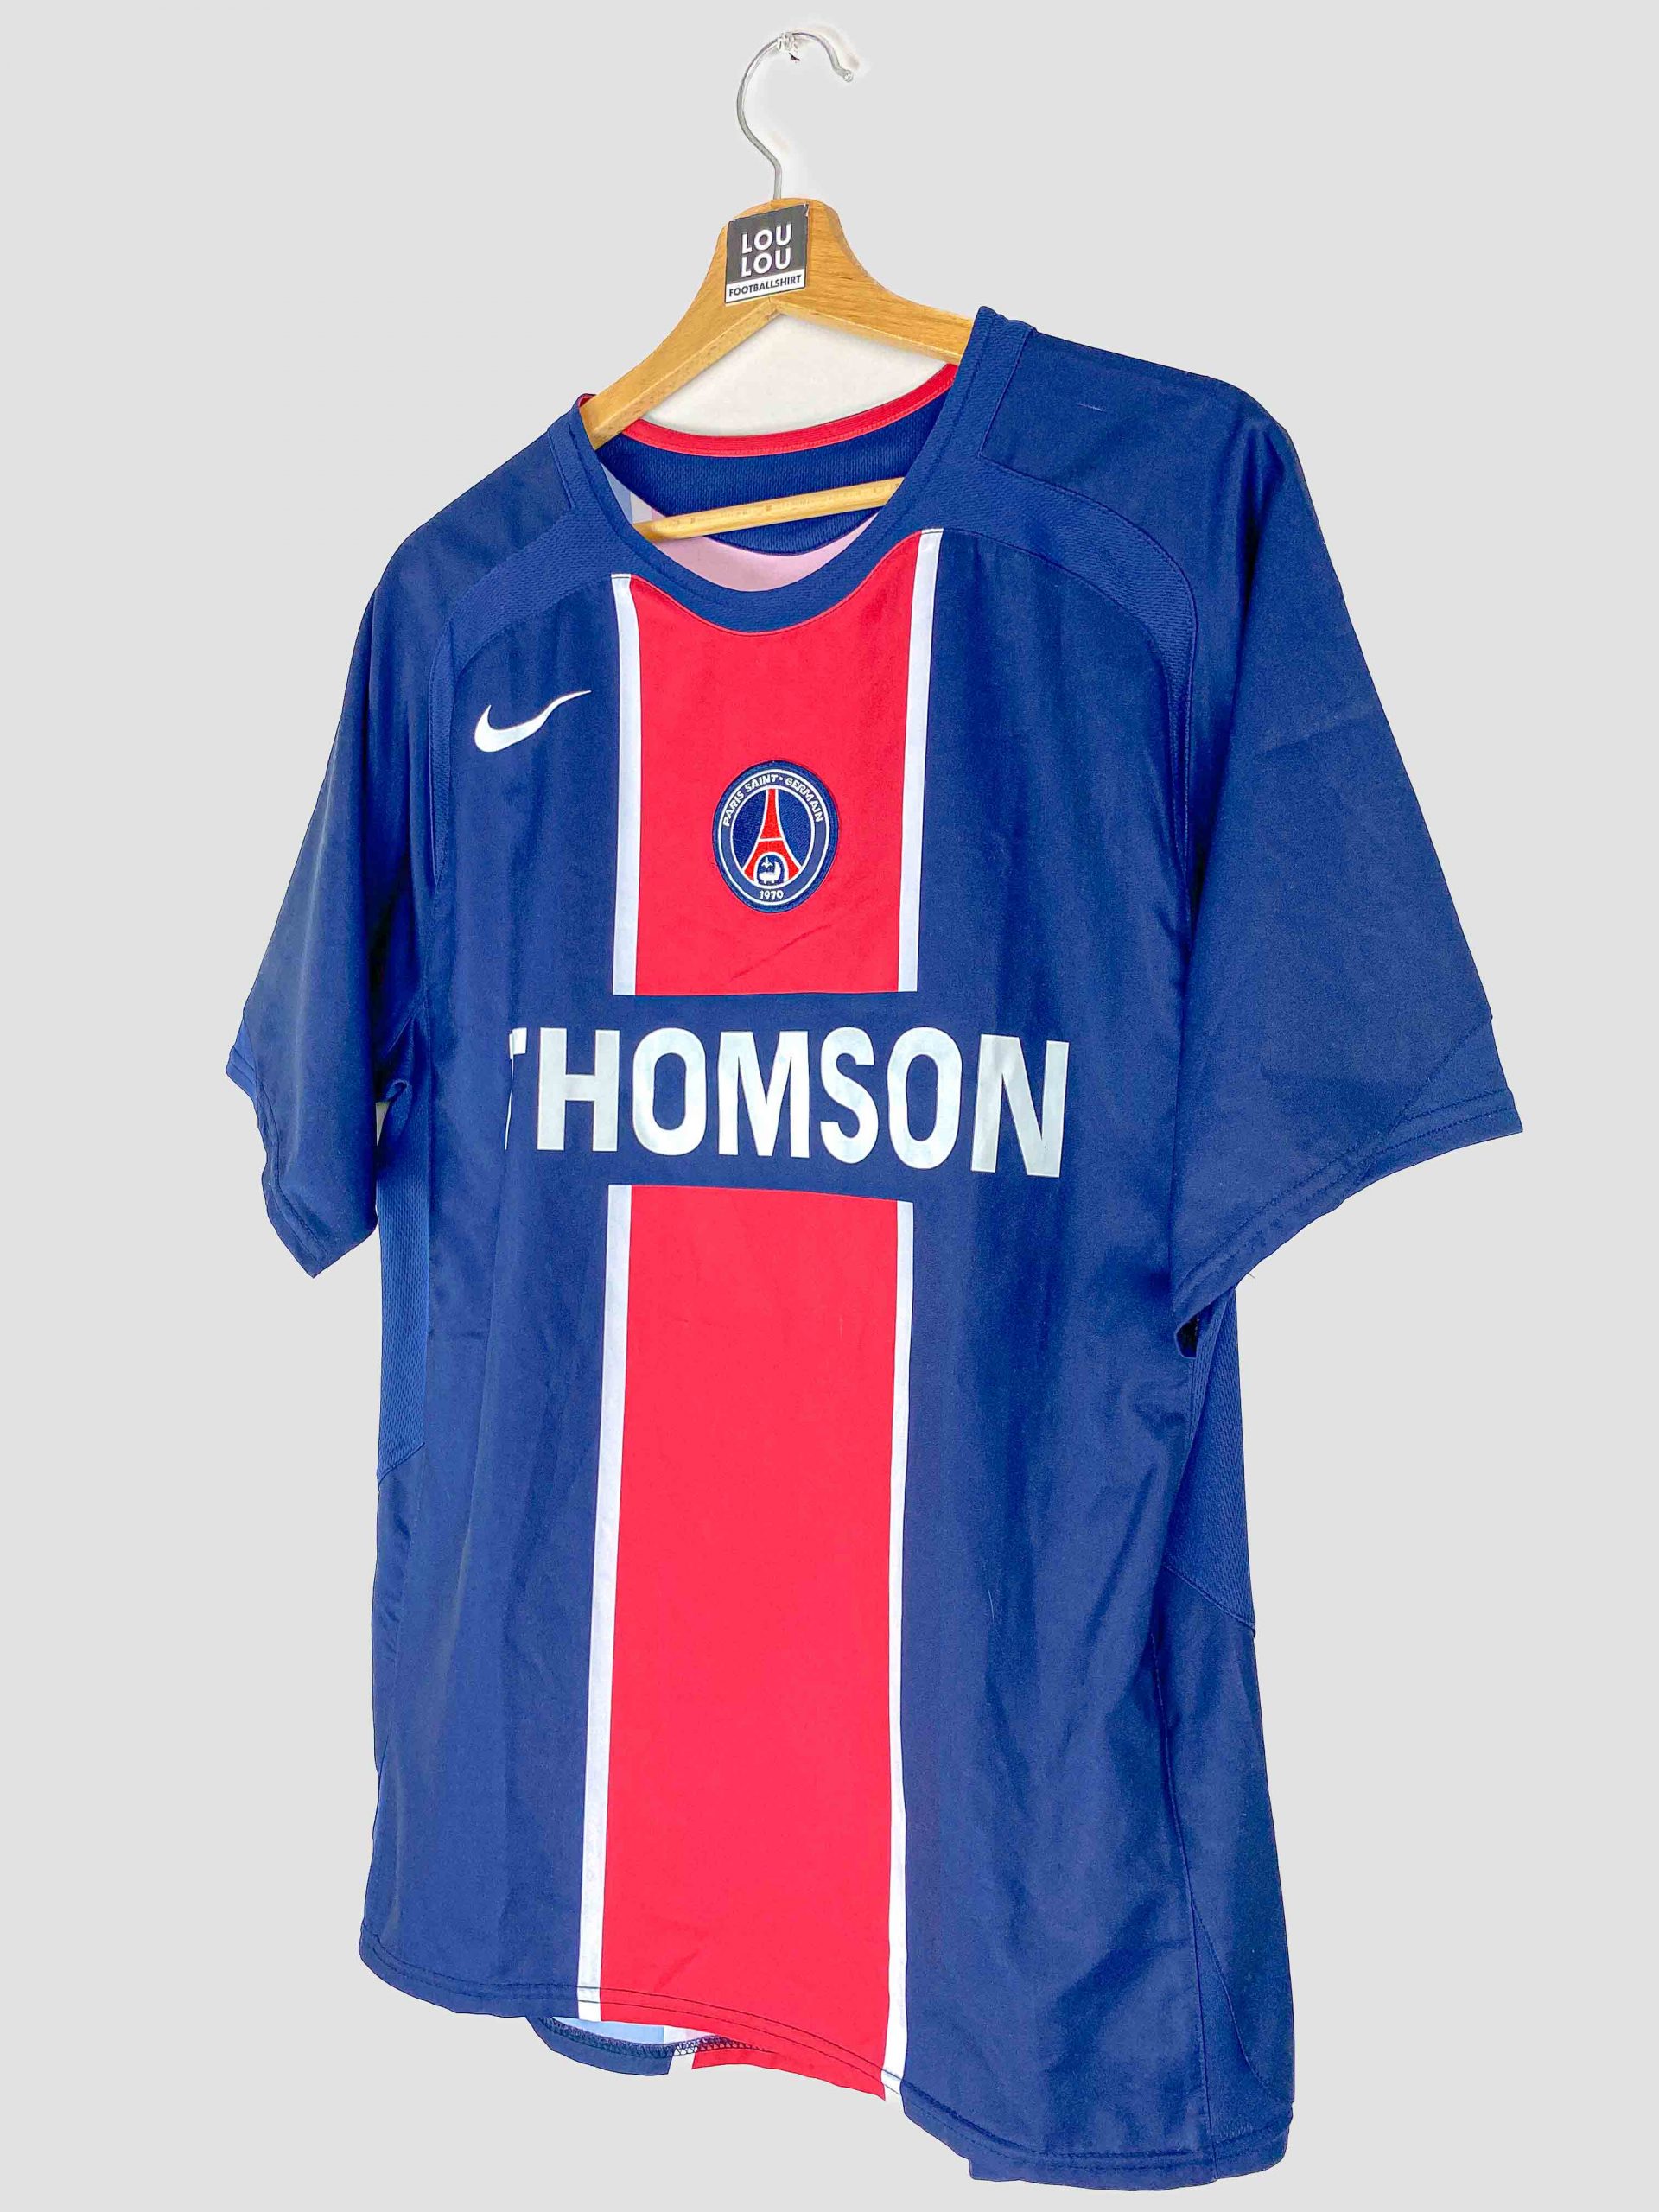 Paris Saint-Germain Away football shirt 2005 - 2006.